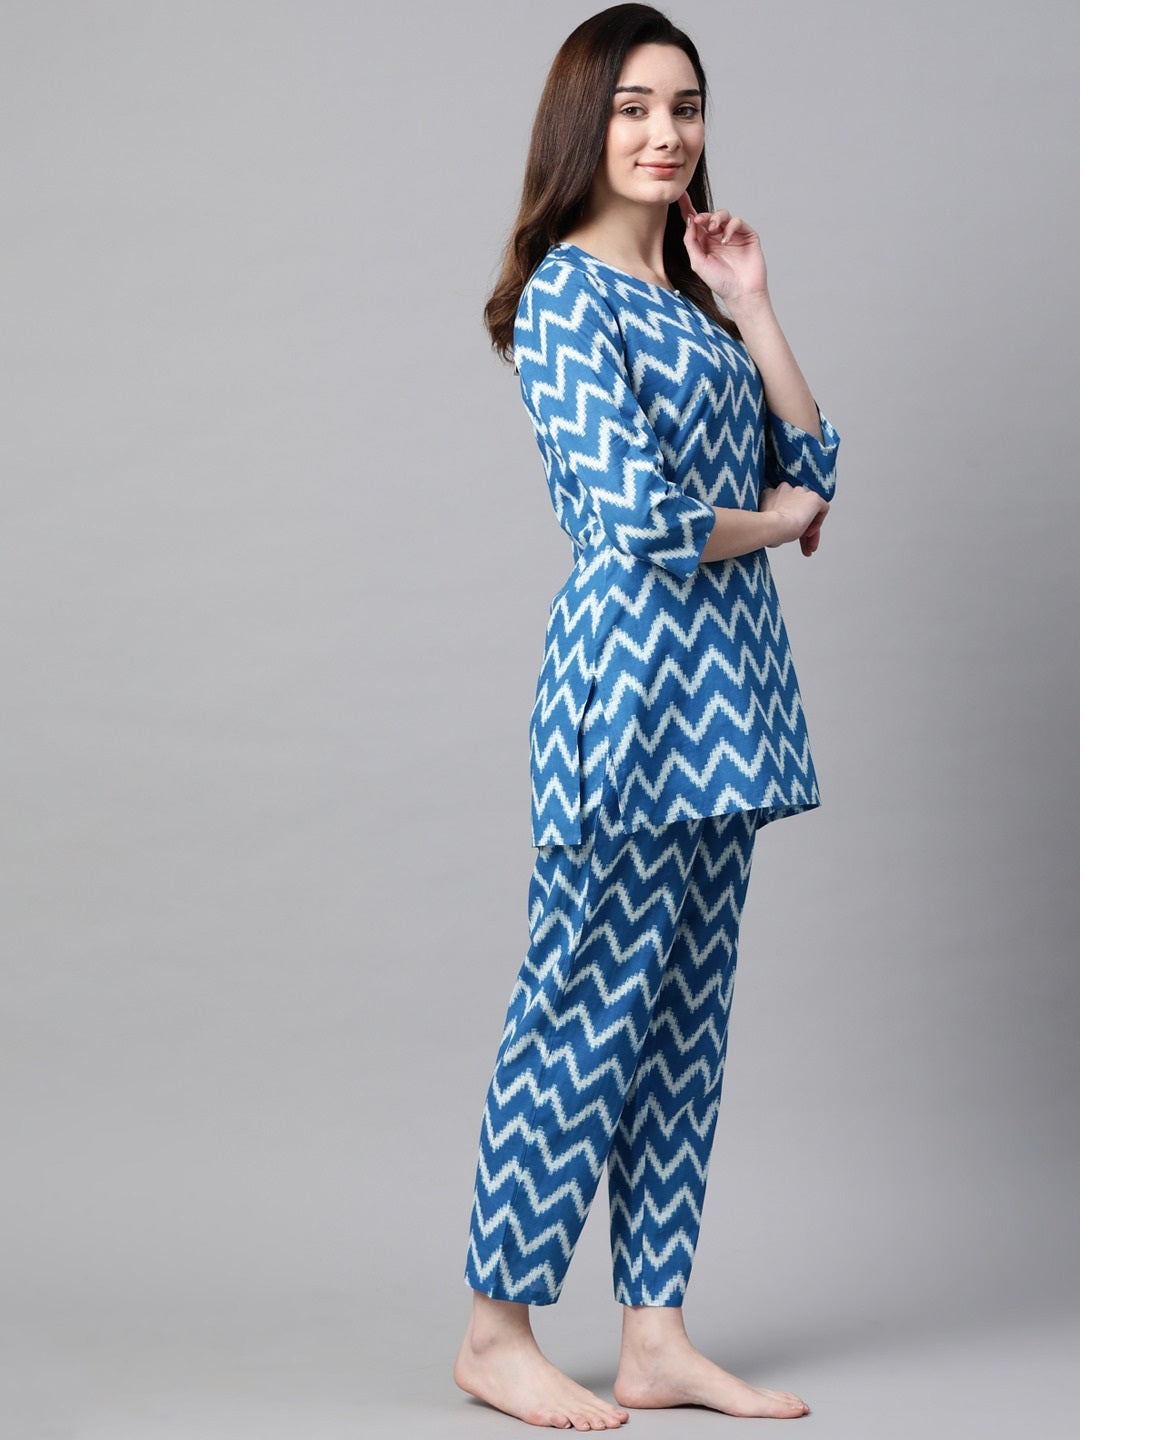 Women's Turquoise Blue & White Graphic Printed Night suit - Meeranshi